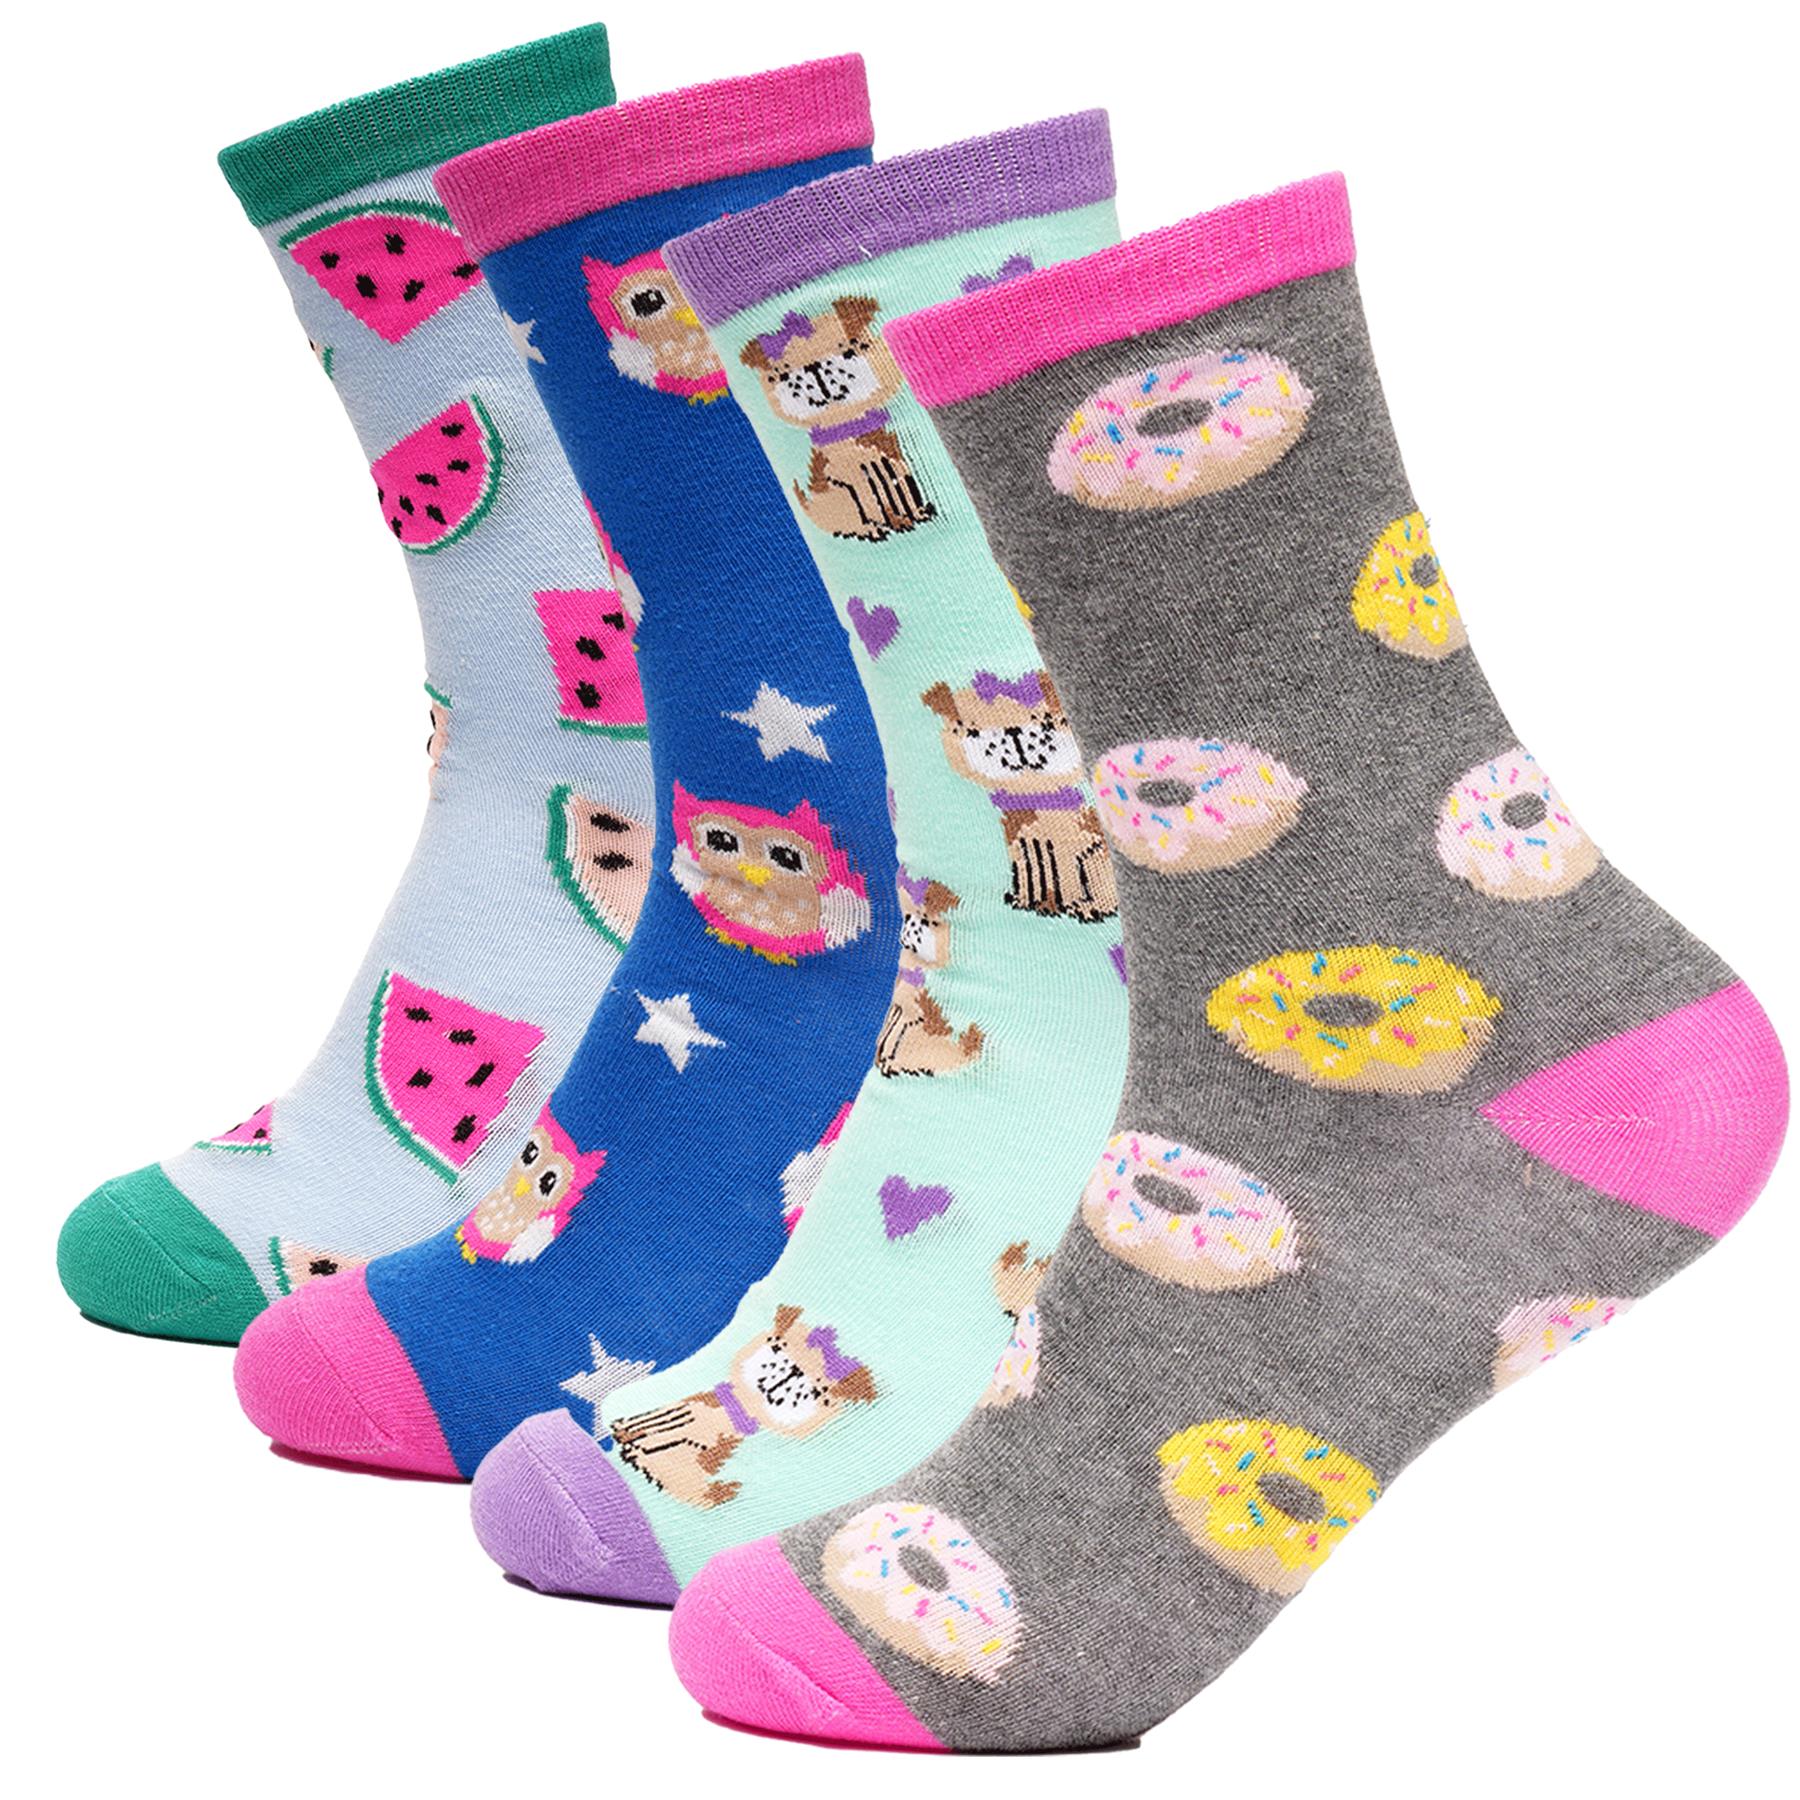 A2Z Ladies Novelty Crew Cotton Socks Comfortable Pack Of 4 Women Socks